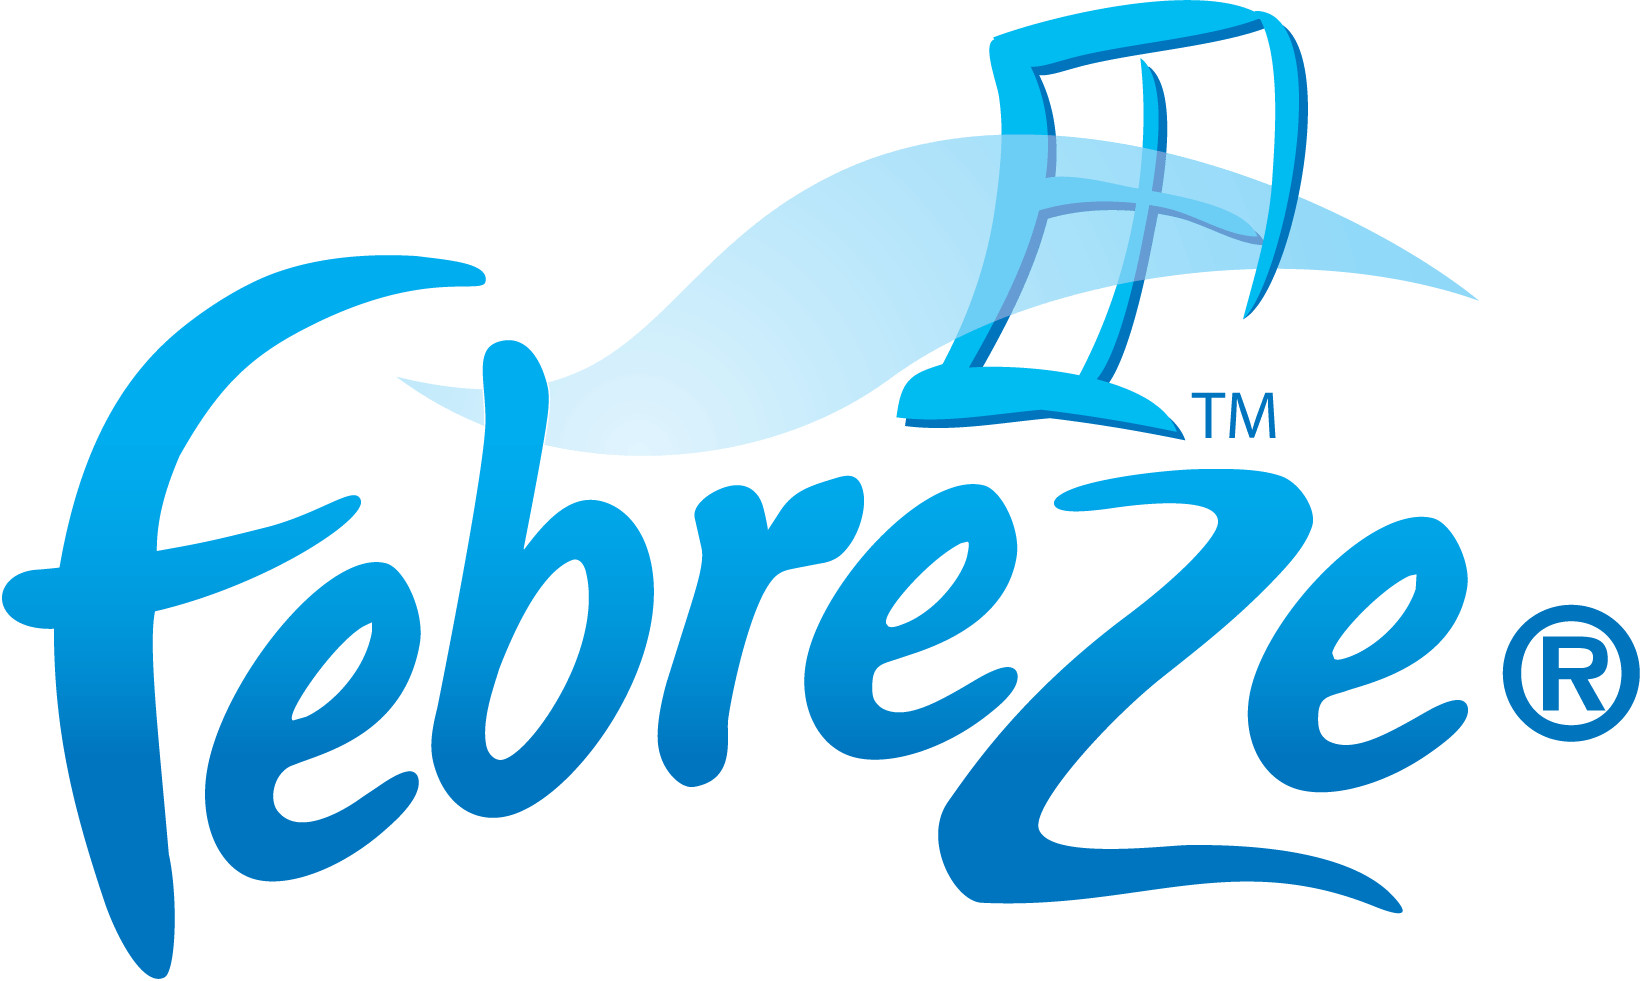 Frebeze Logo - Febreze | Logopedia | FANDOM powered by Wikia